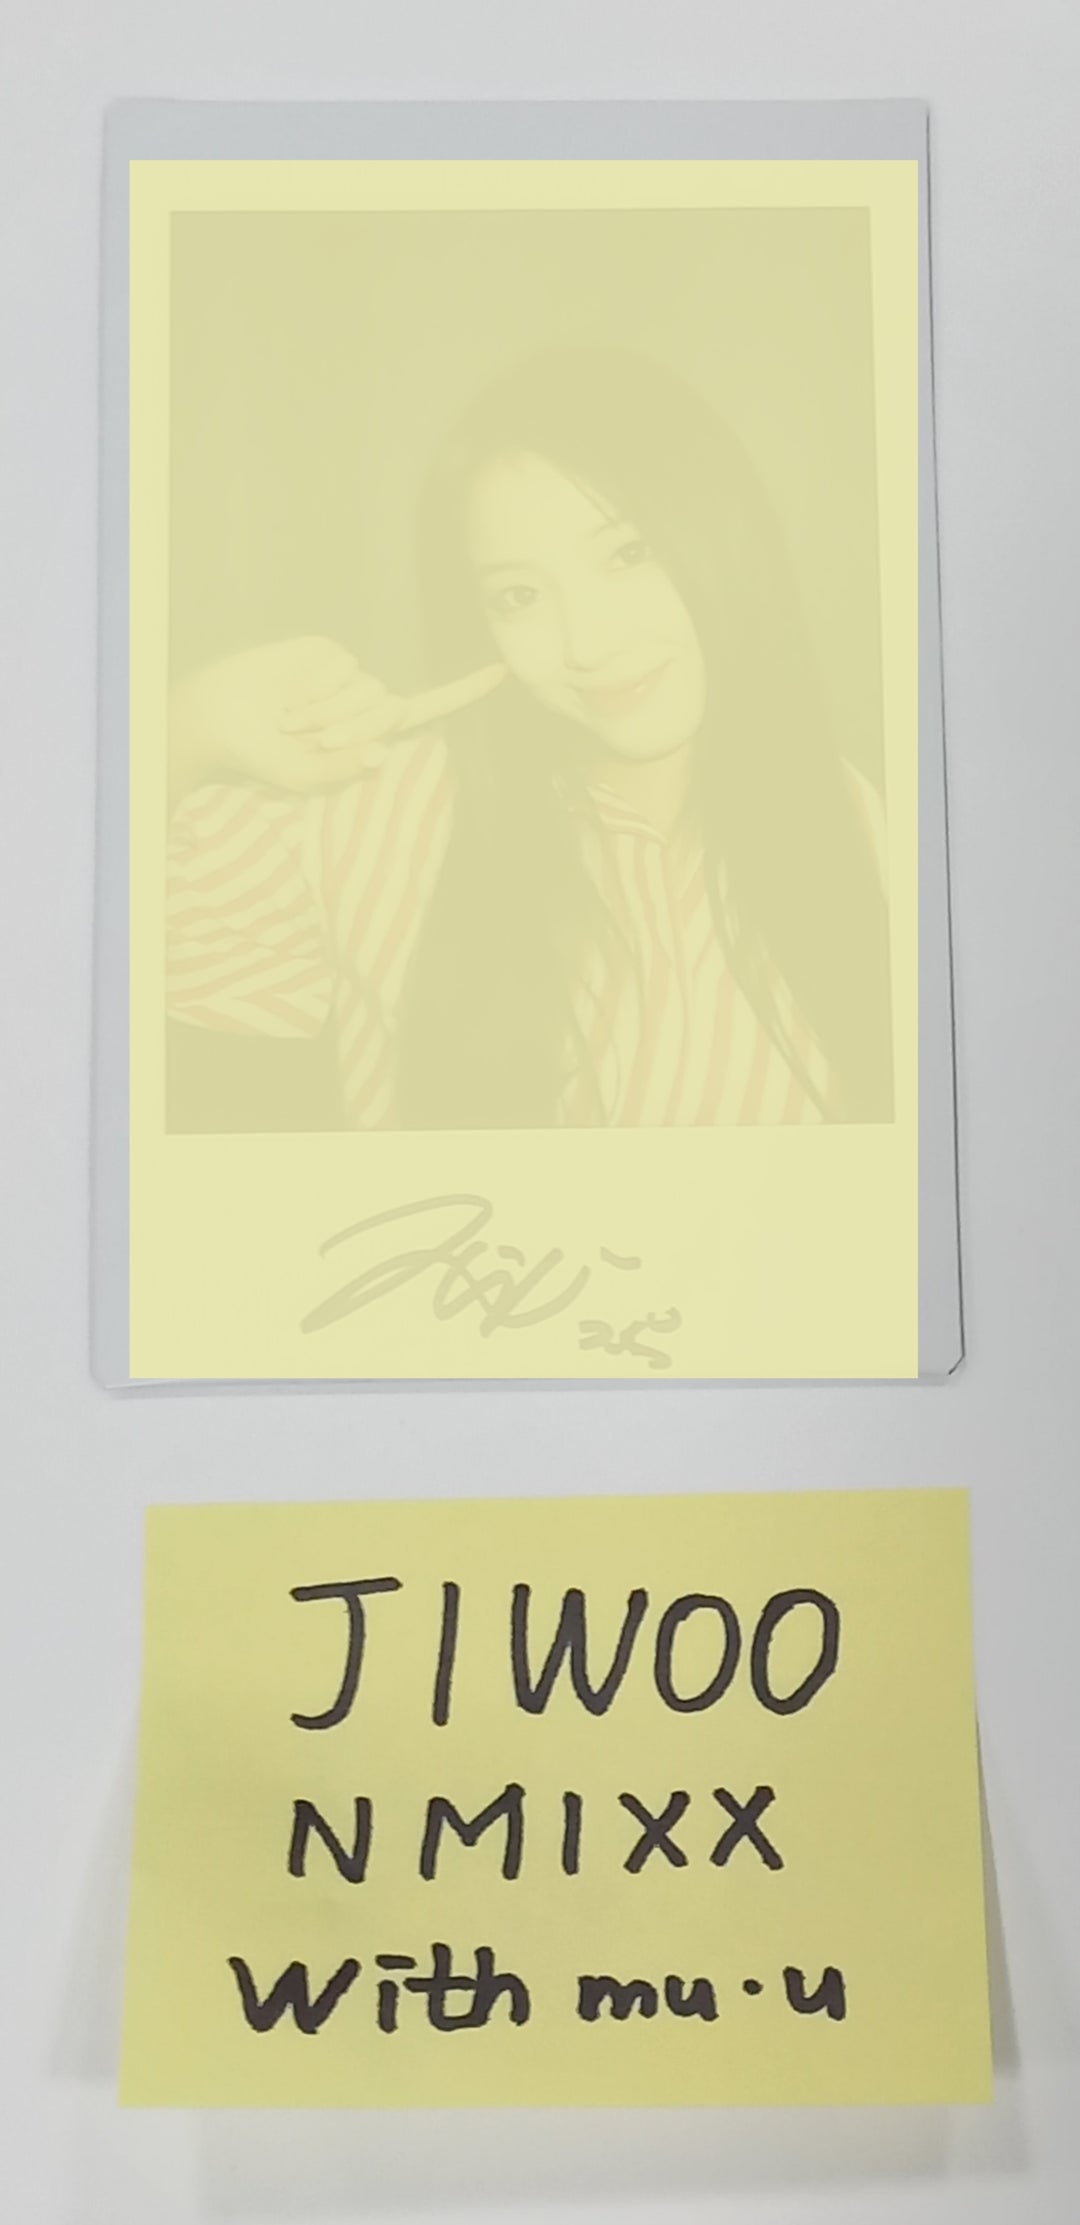 JIWOO (Of NMIXX) "A Midsummer NMIXX’s Dream" - Hand Autographed(Signed) Polaroid